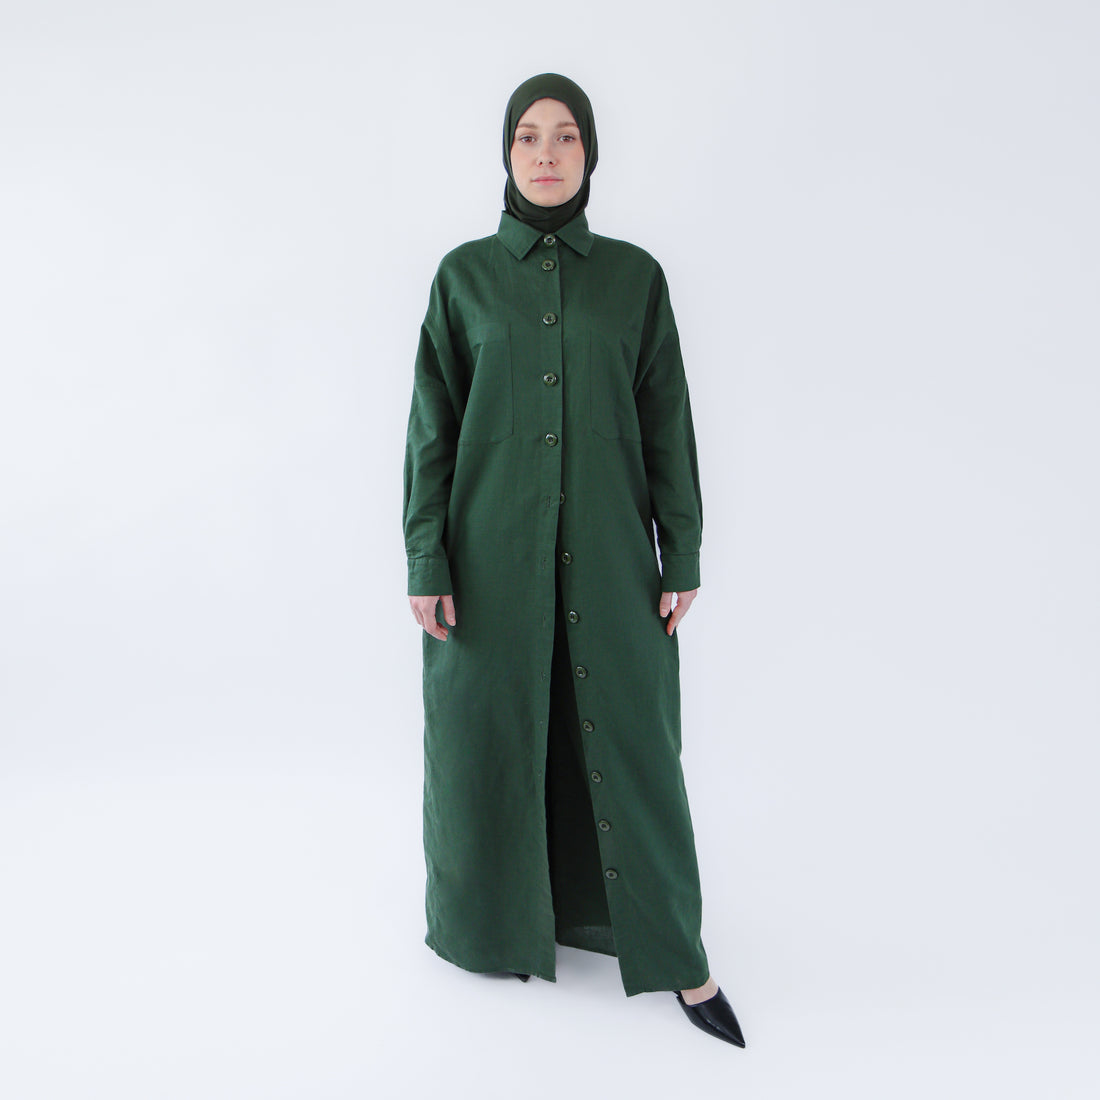 Abaya dress style maxi dress for women with wide trousers "Khaki Linen" 1